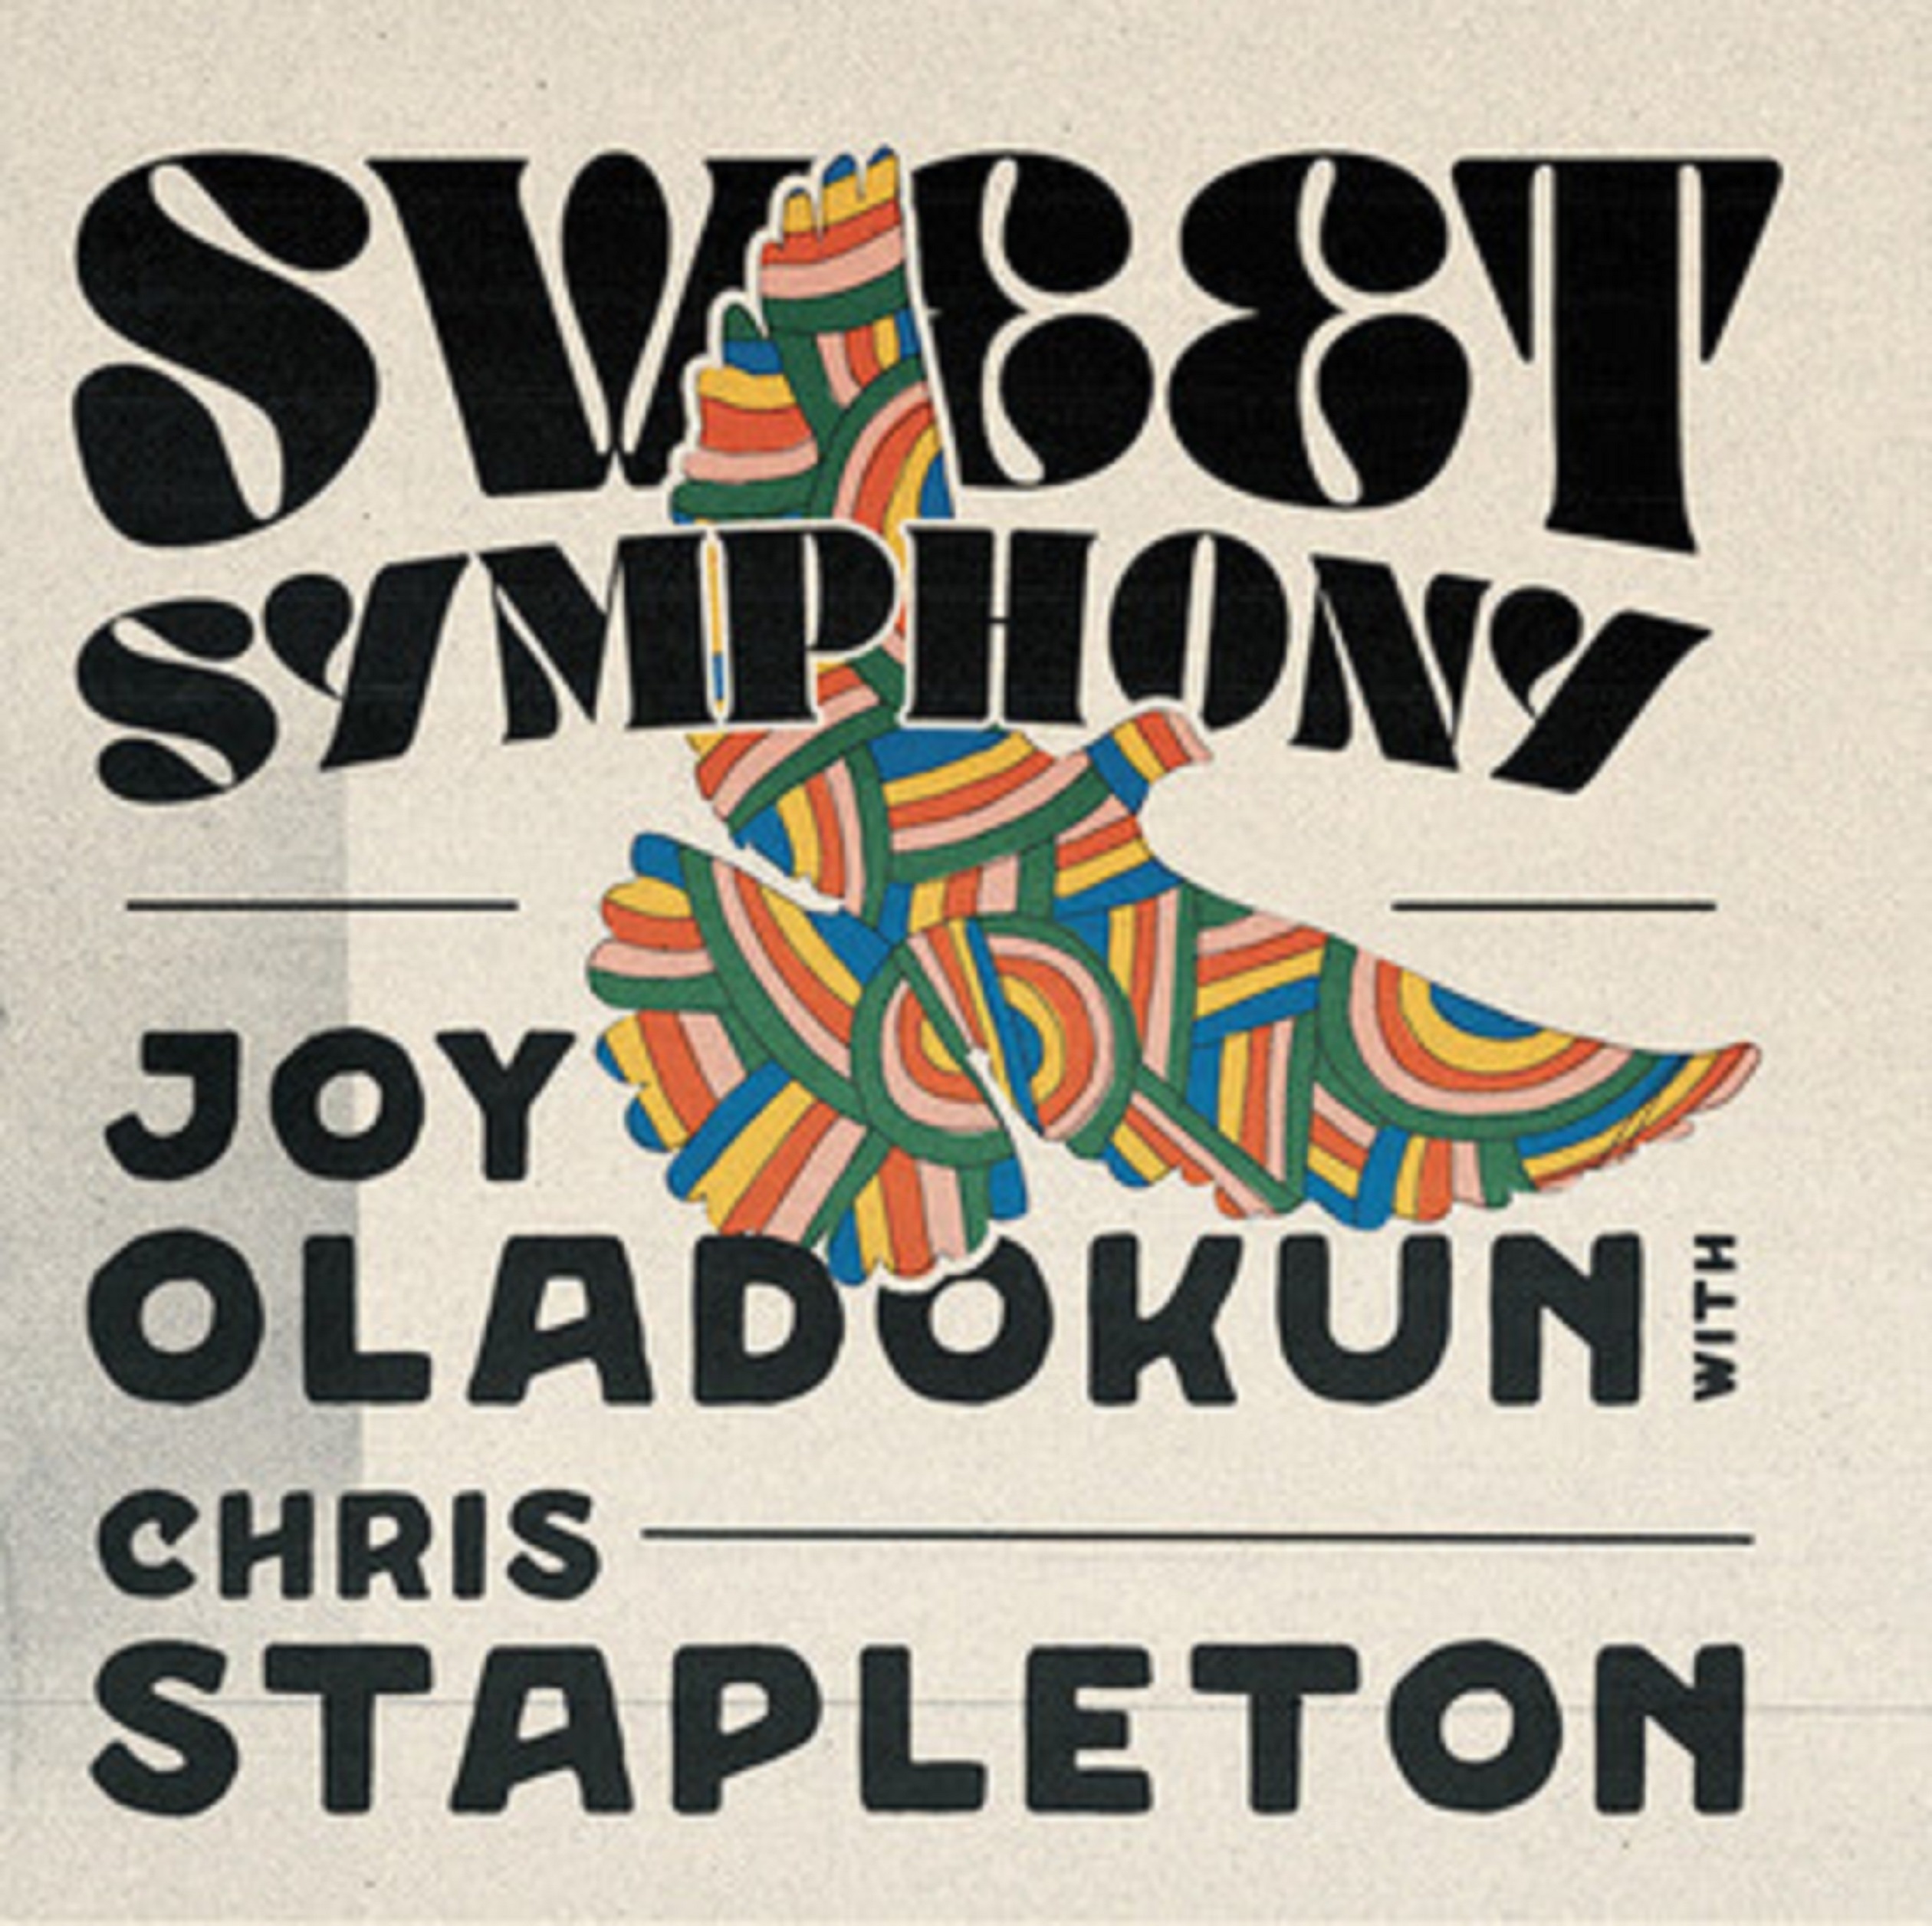 Joy Oladokun collaborates with Chris Stapleton on new song “Sweet Symphony”